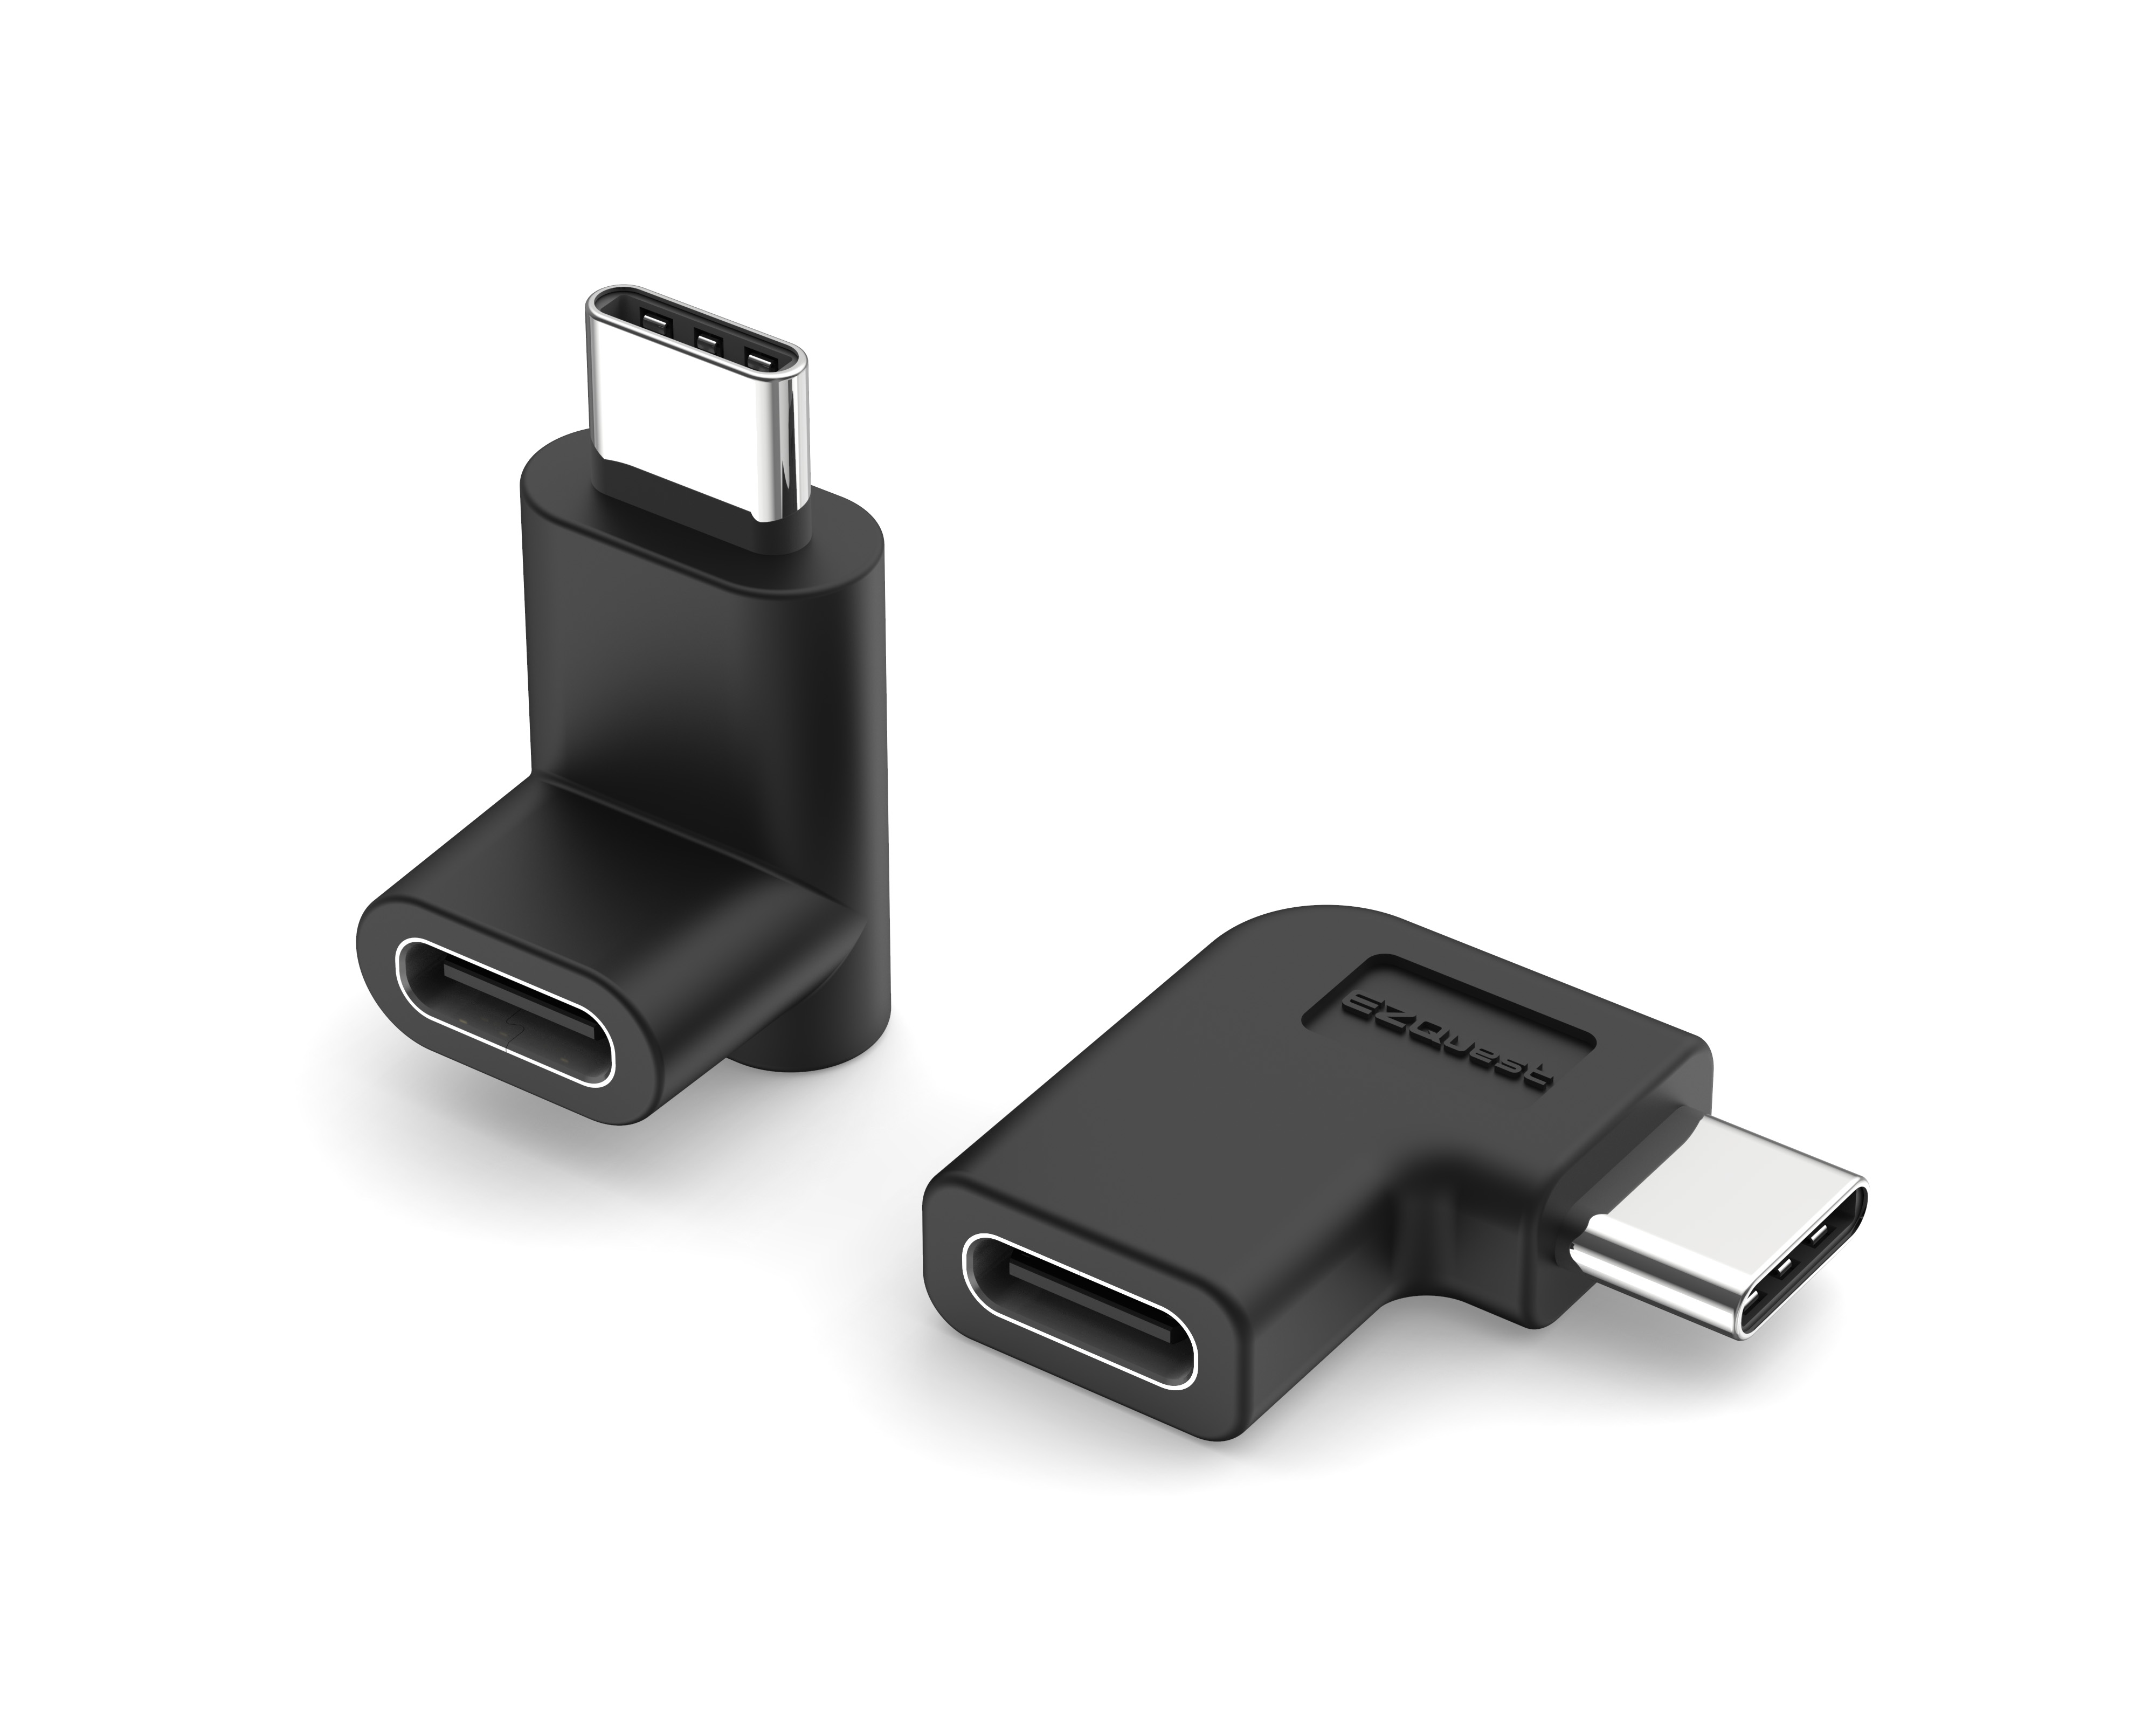  USB C Coupler, Female To Female Adapter 2 Pack USB